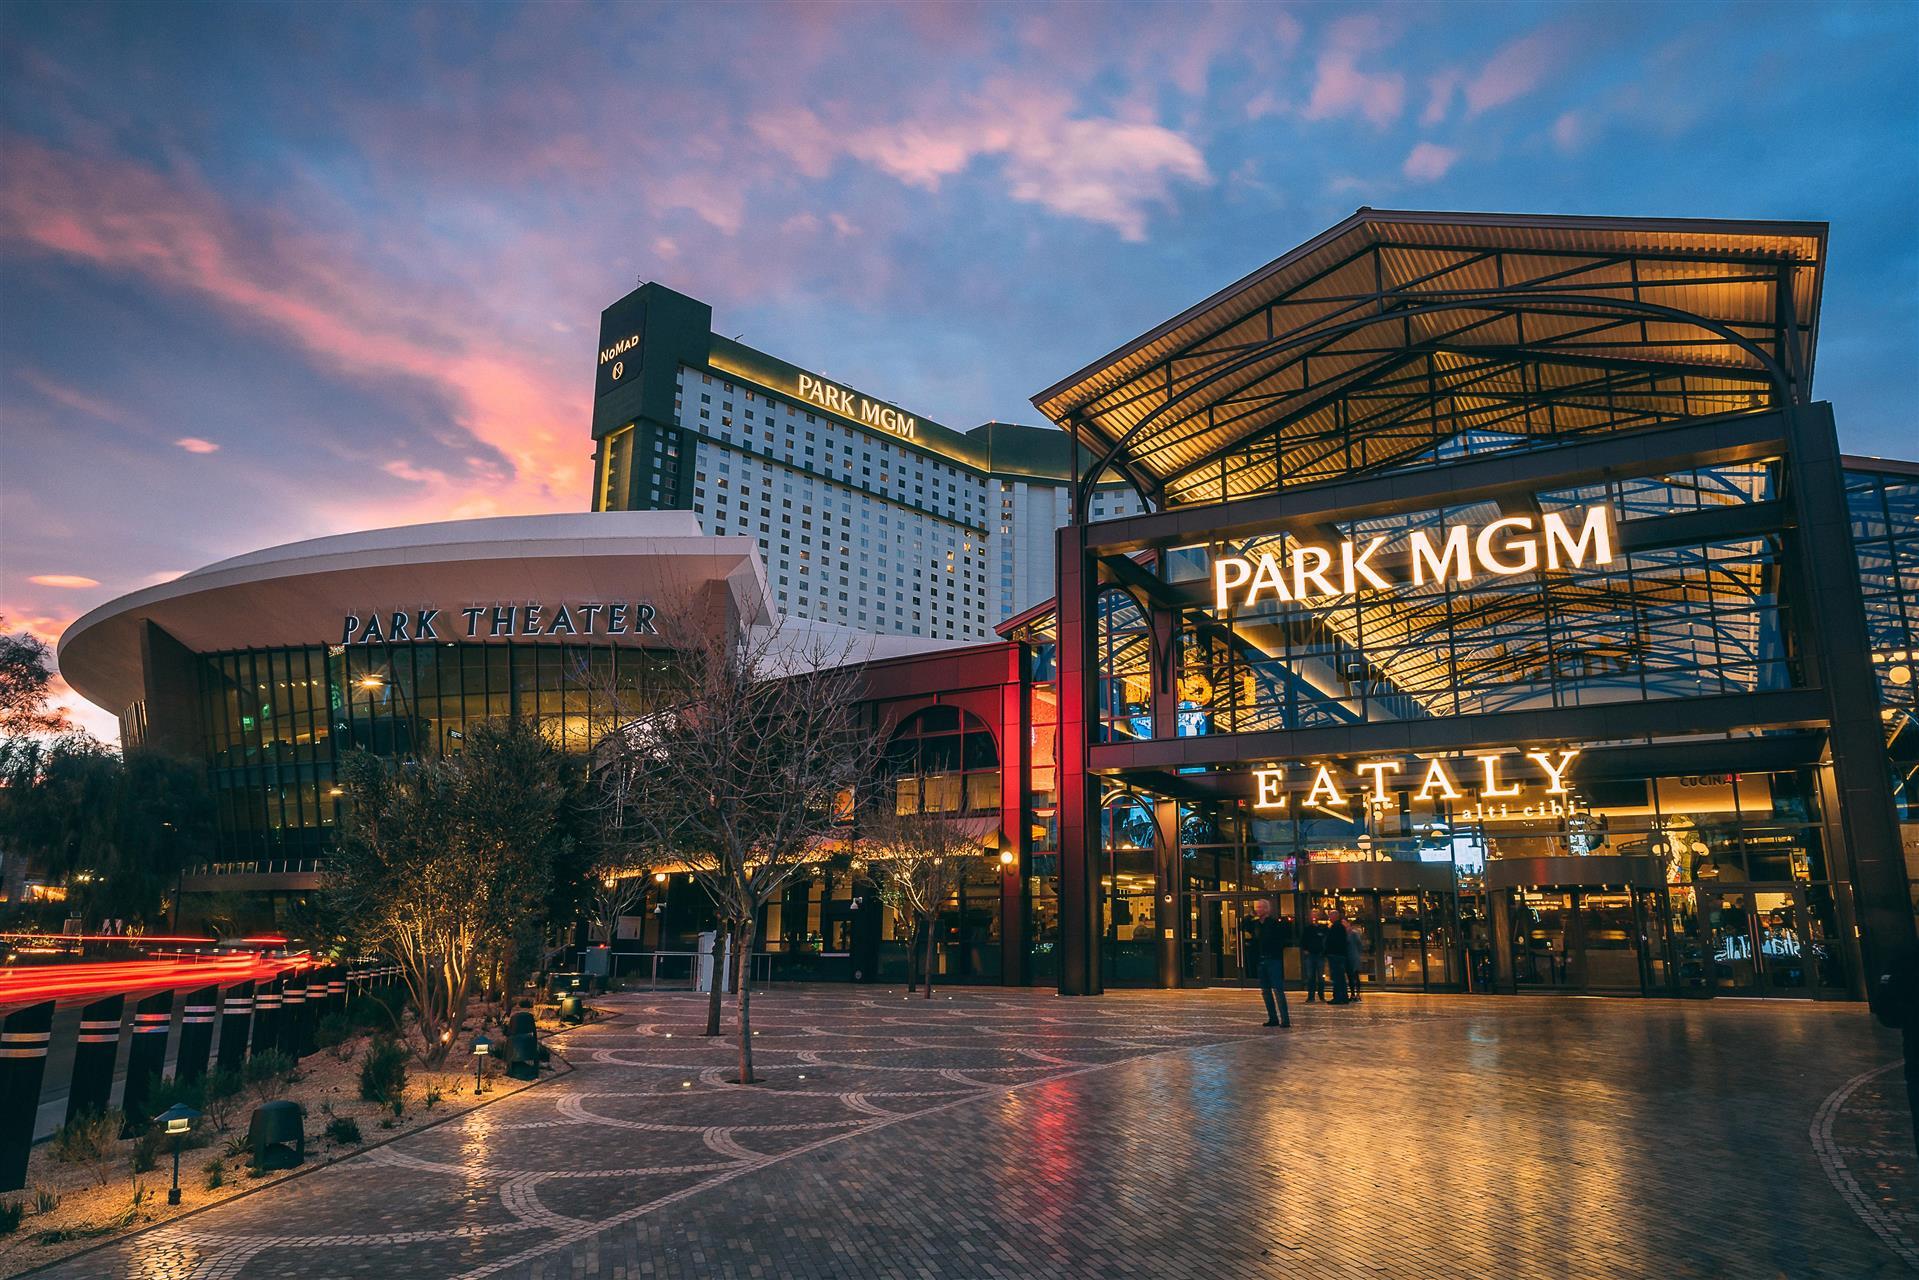 Park MGM in Las Vegas, NV